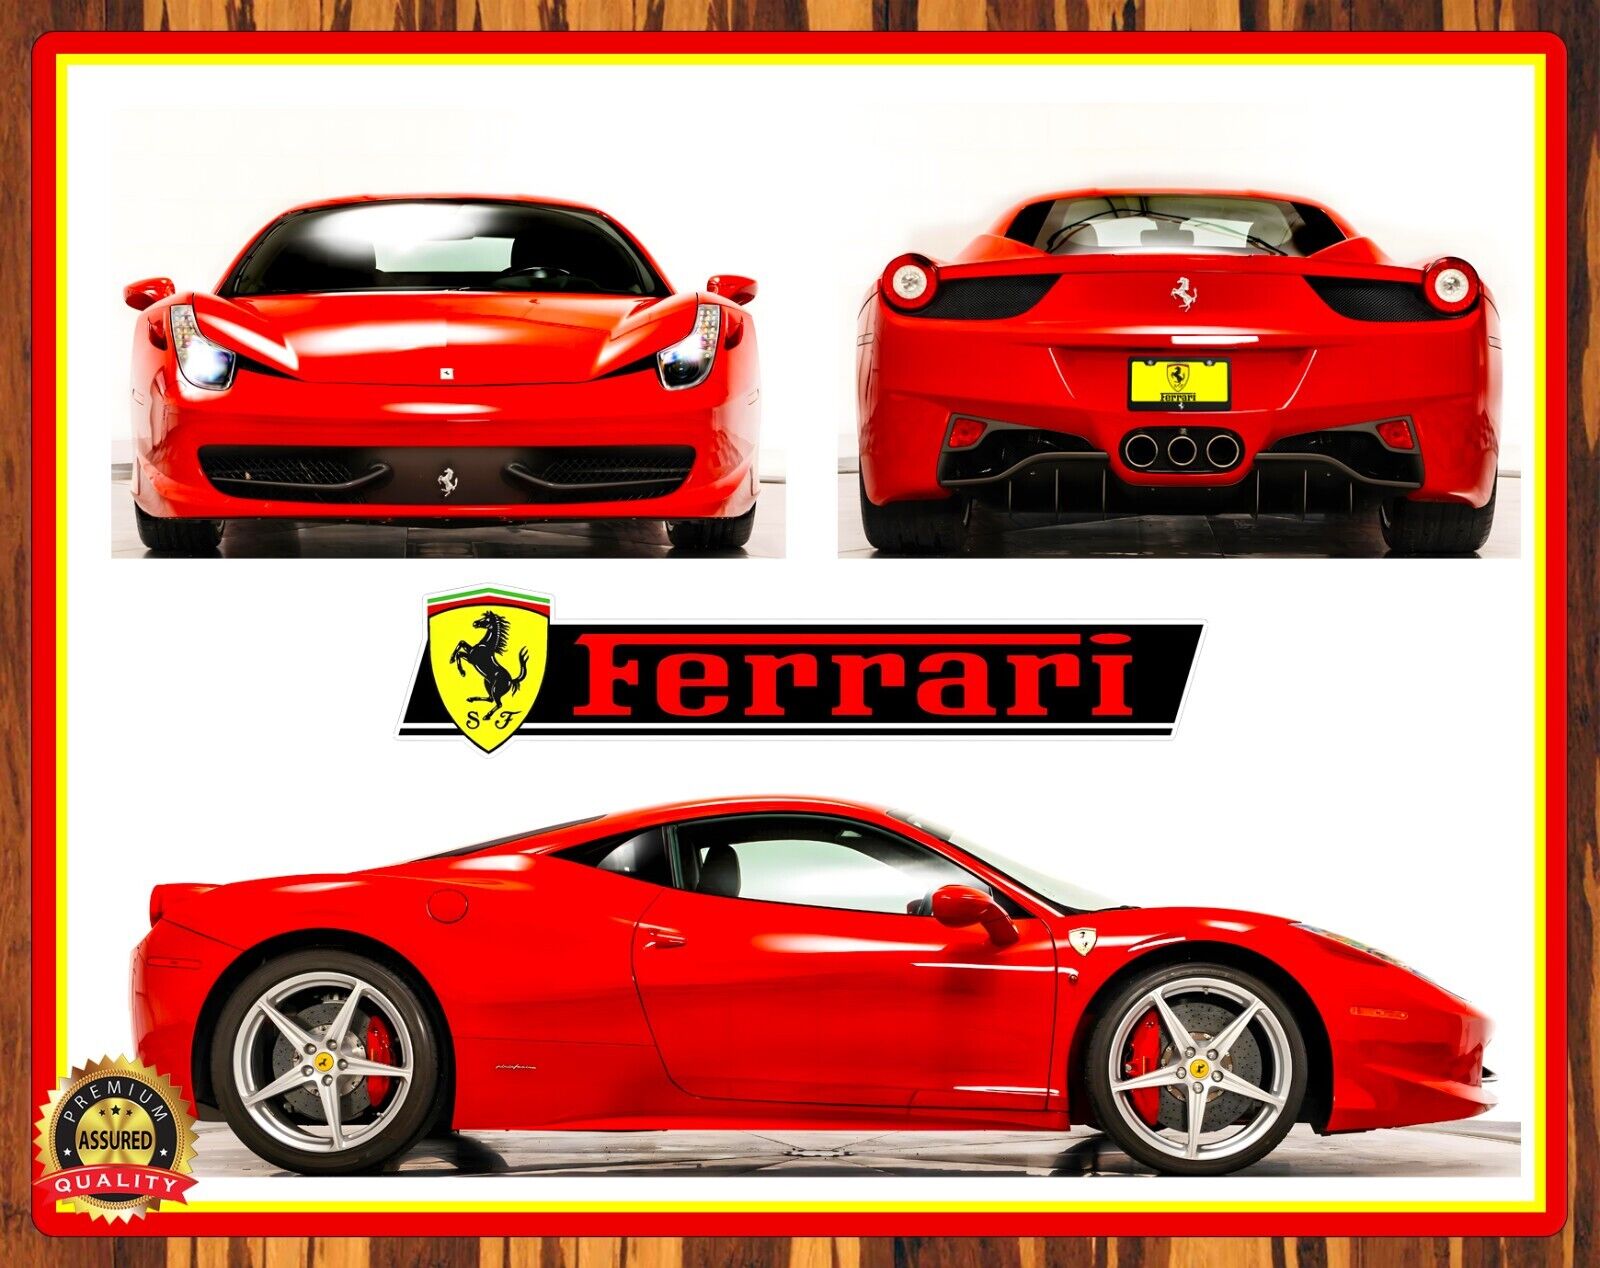 2011 Ferrari 458 Italia - Supercar - Metal Sign 11 x 14